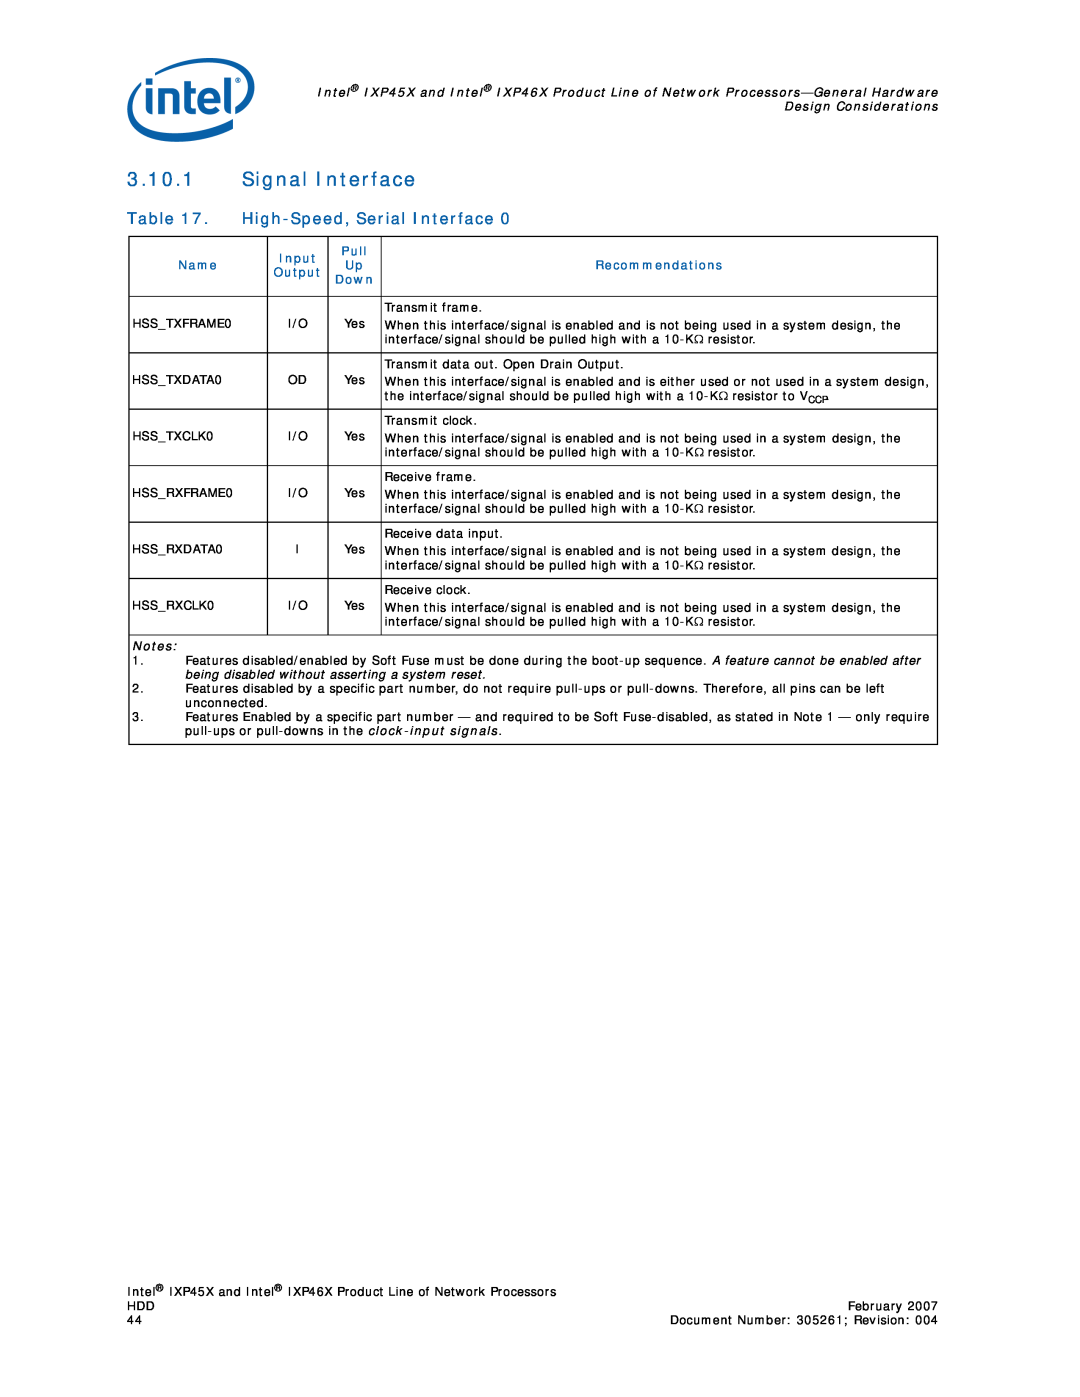 Intel IXP46X, IXP45X manual 3.10.1Signal Interface, High-Speed,Serial Interface 